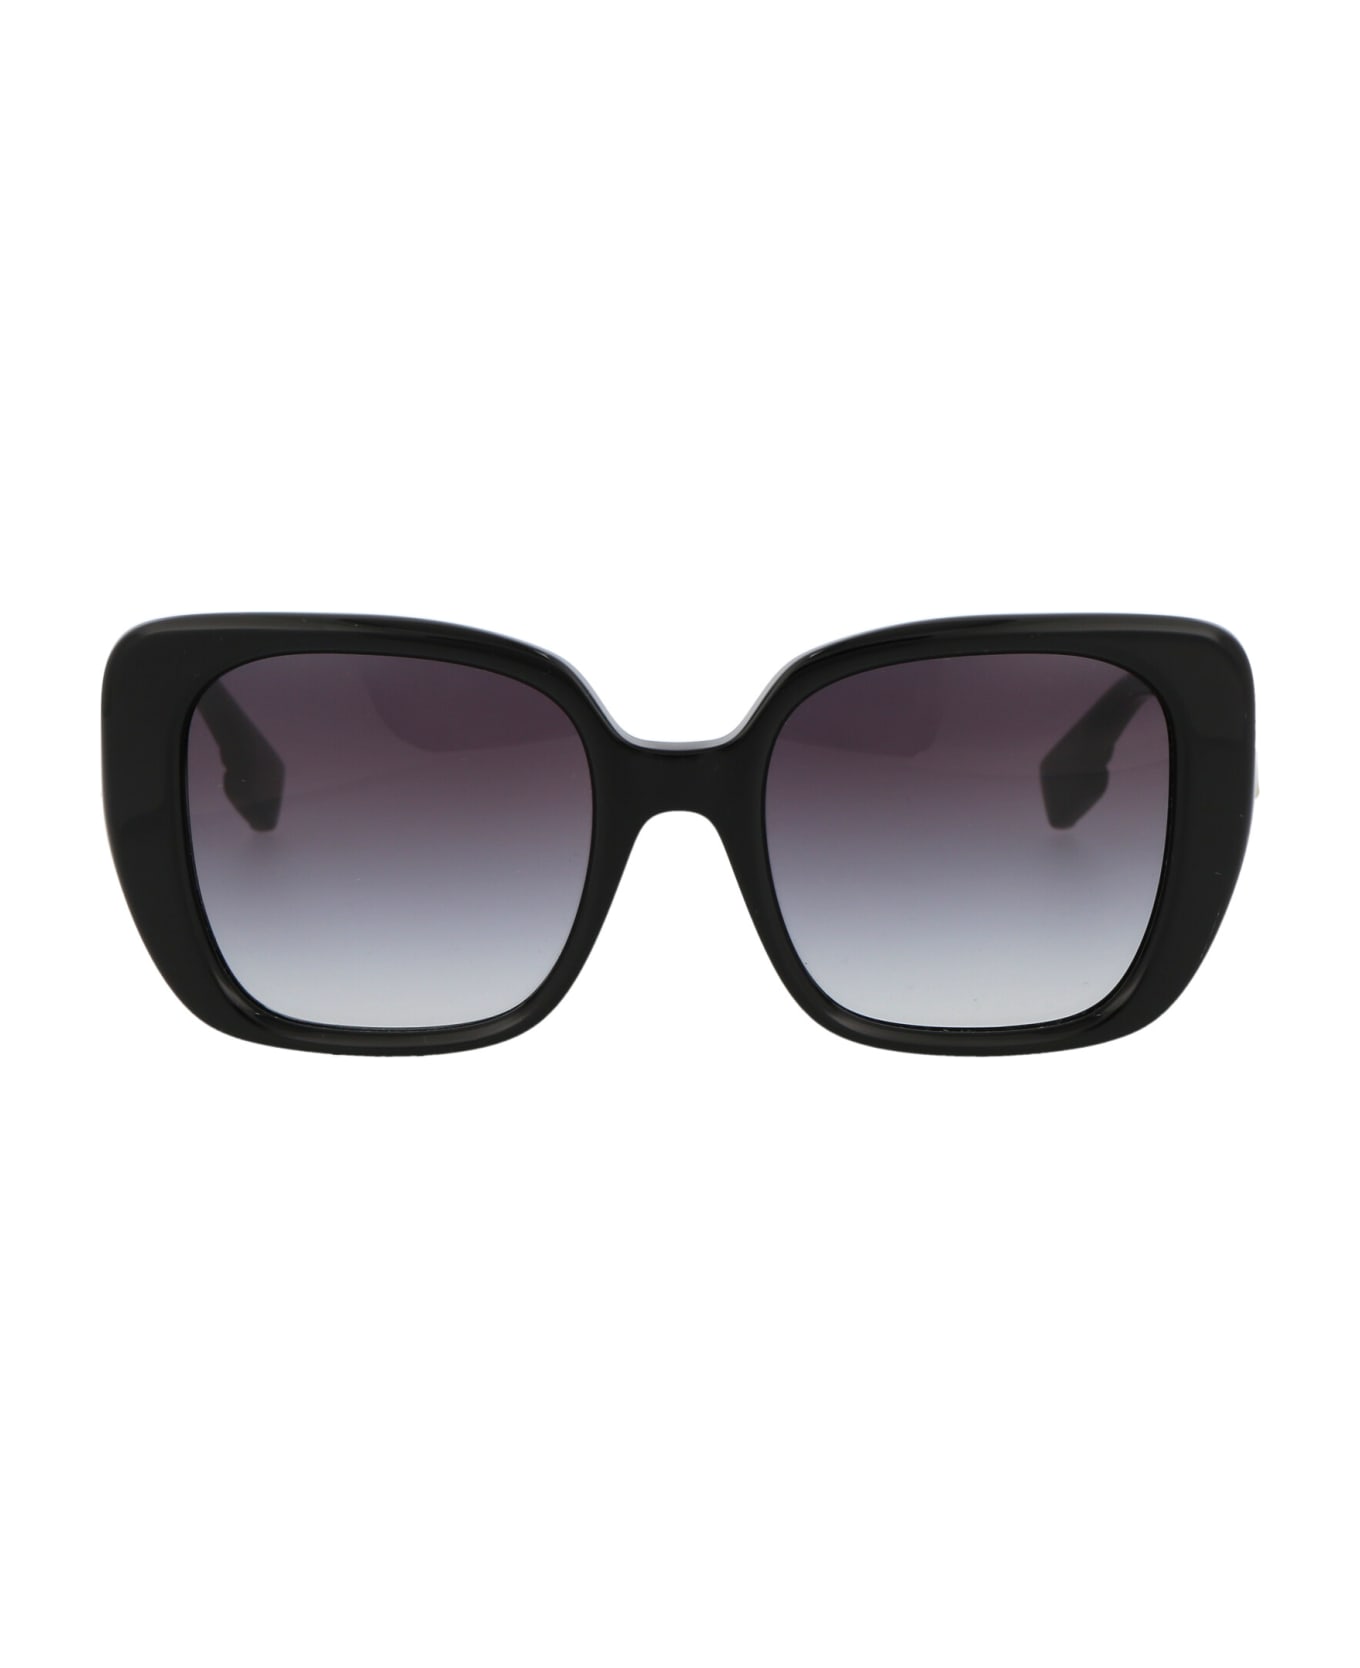 Burberry Eyewear Helena Sunglasses - 30018G BLACK